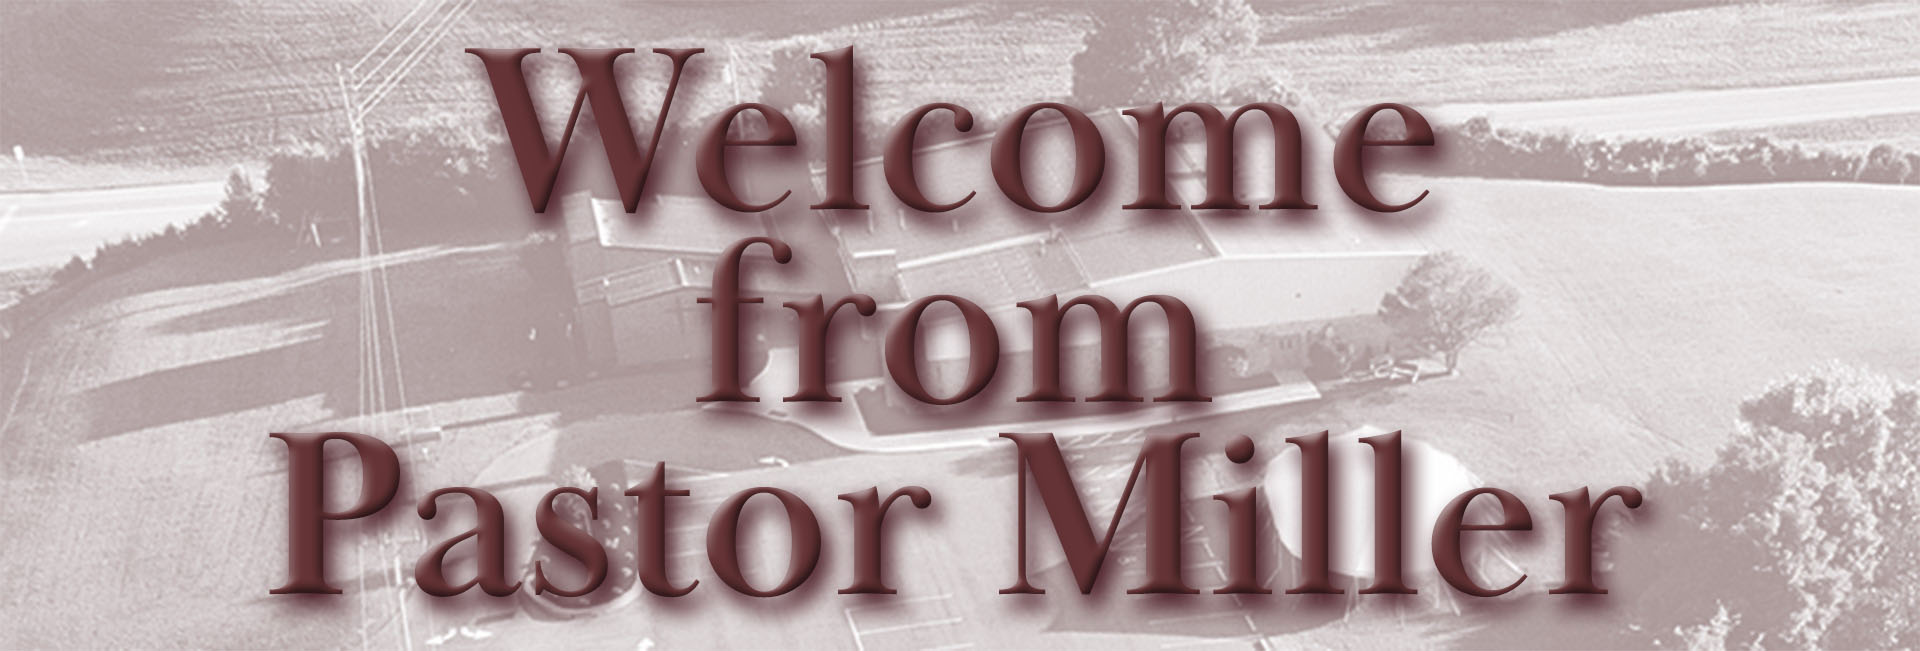 Maroon_Campus_-_Welcome_from_Pastor_Miller.jpg